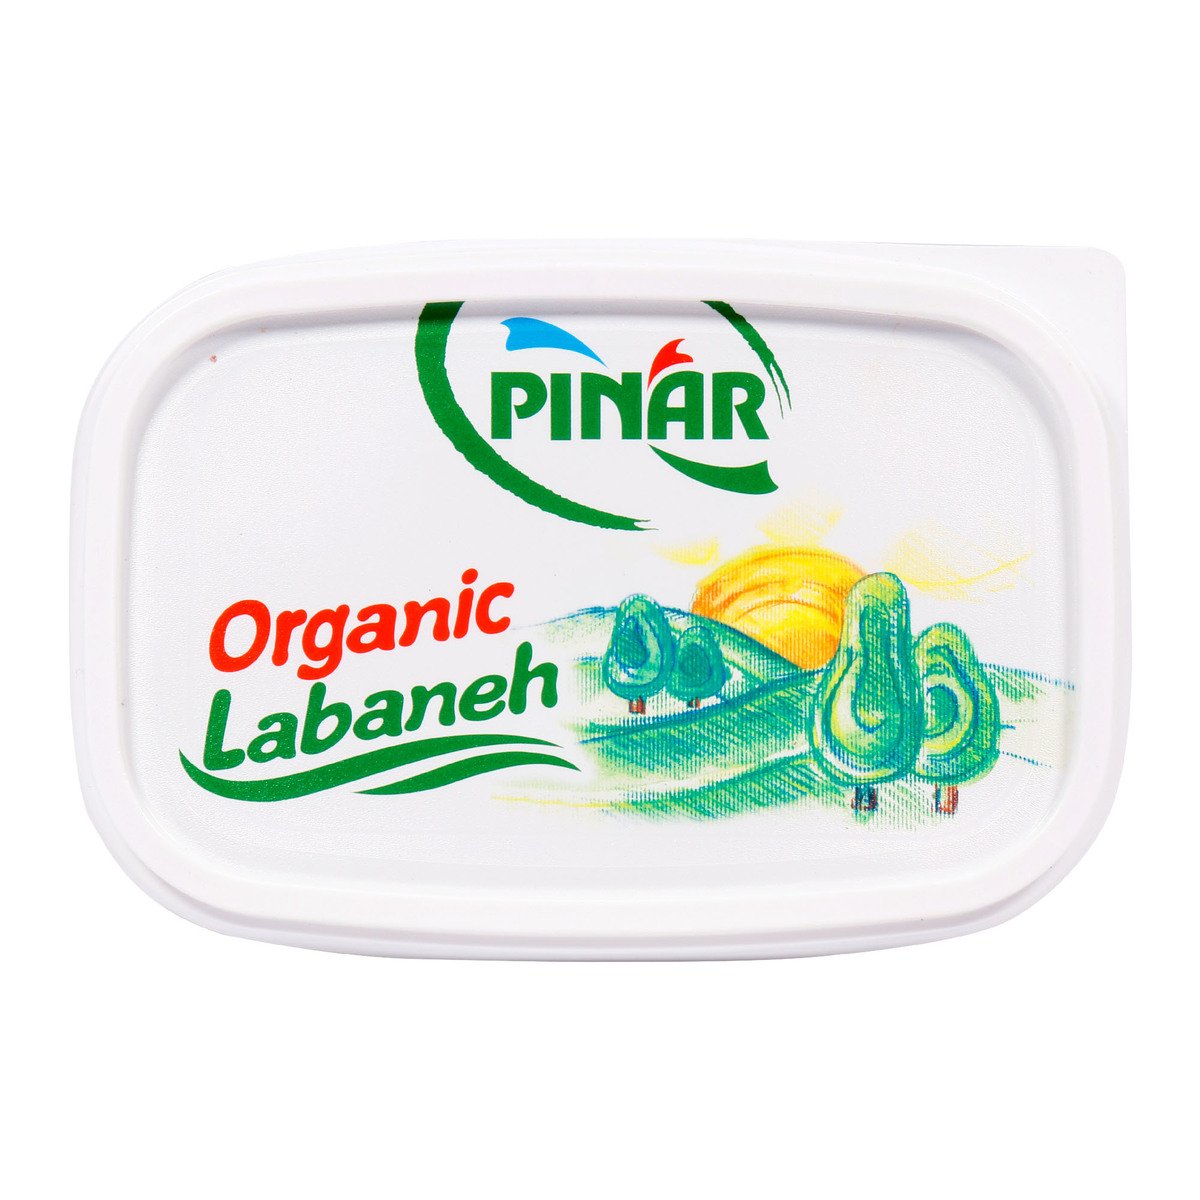 Pinar Organic Labneh 370g